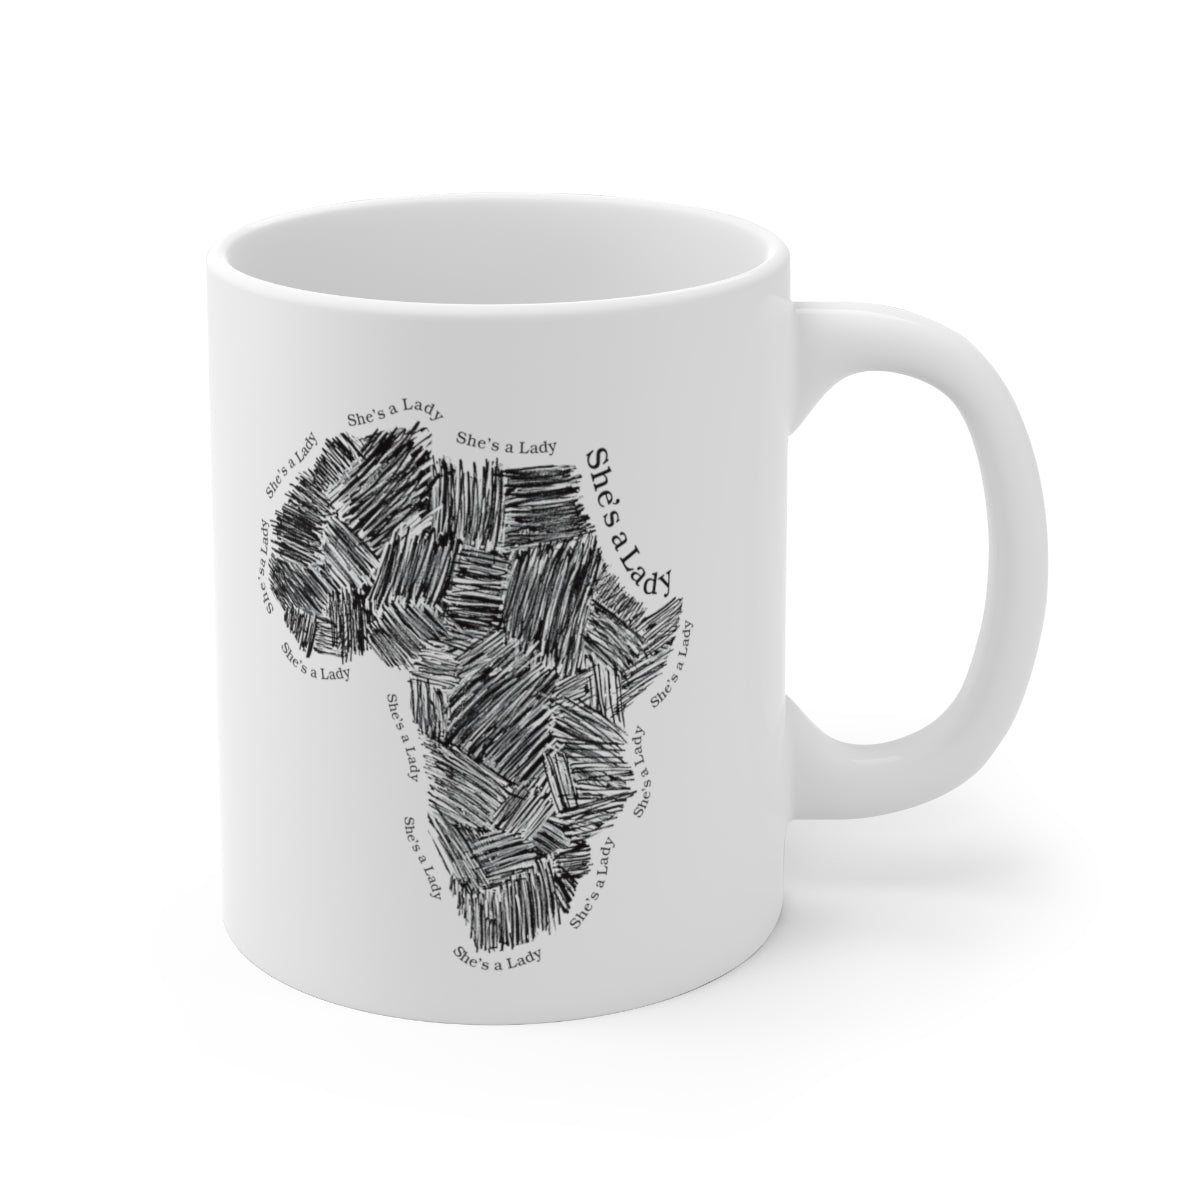 She's a Lady Africa Ceramic Mug 11oz